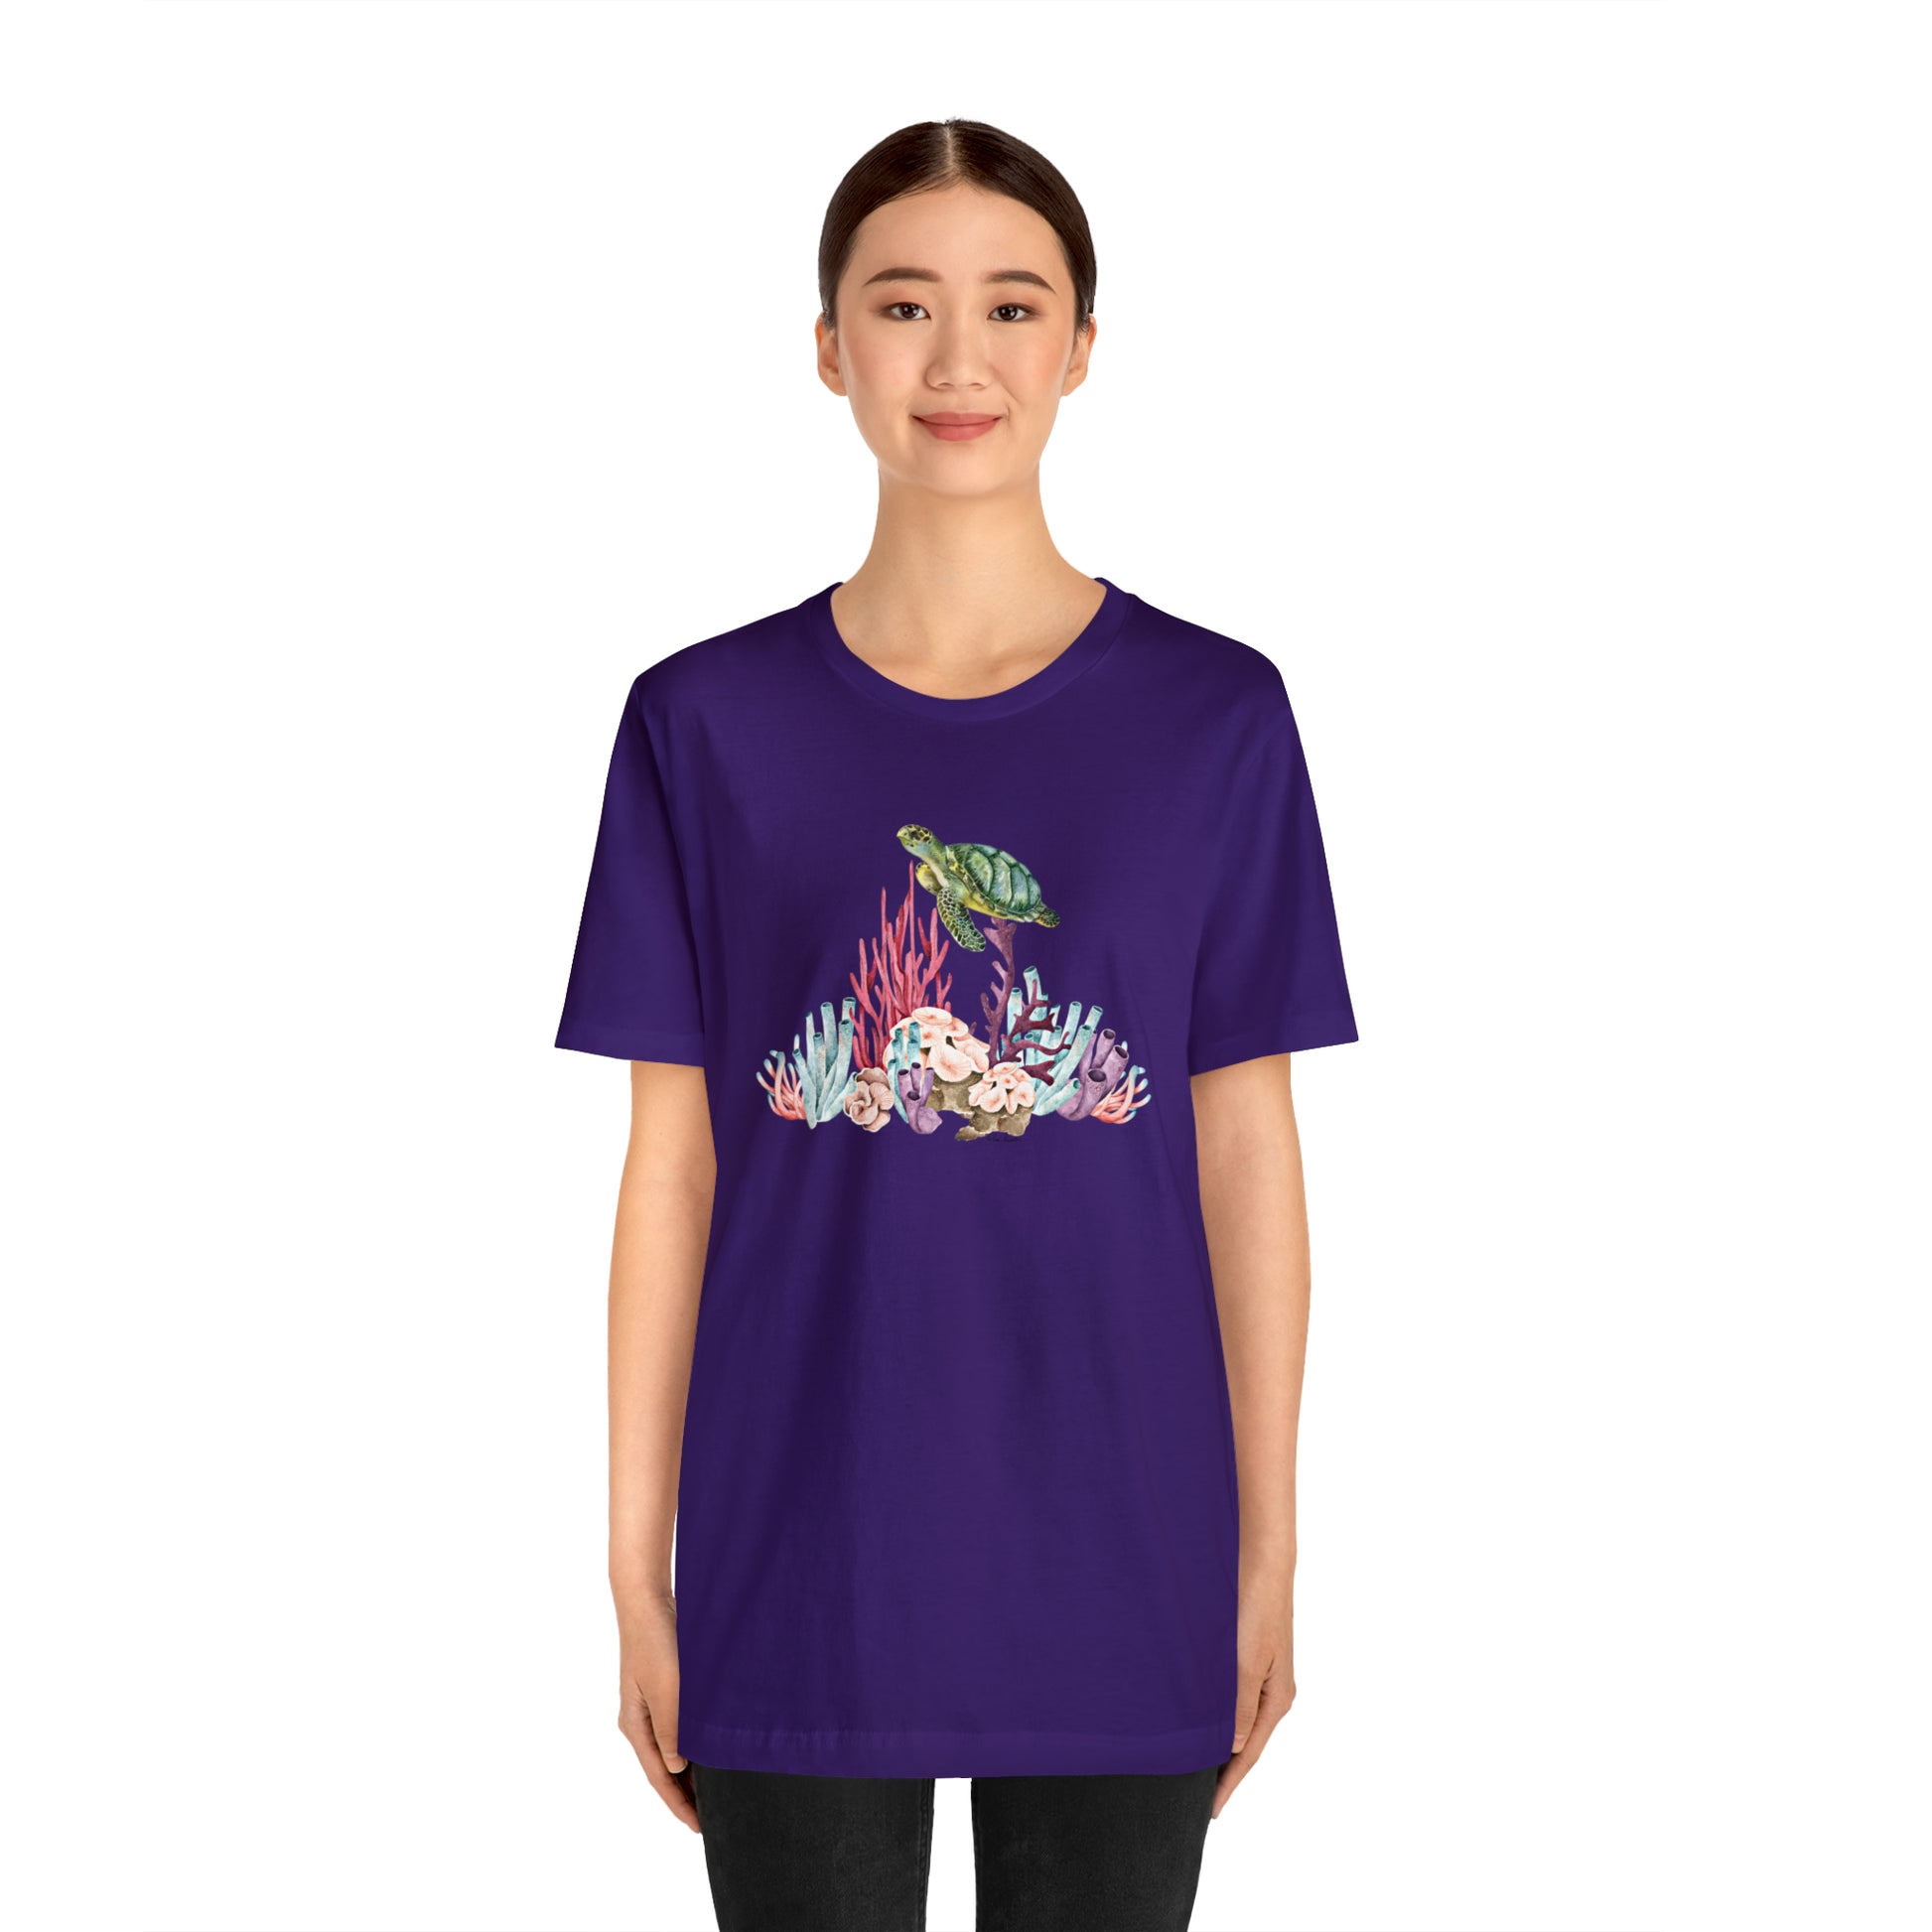 Petite woman wearing the purple shirt